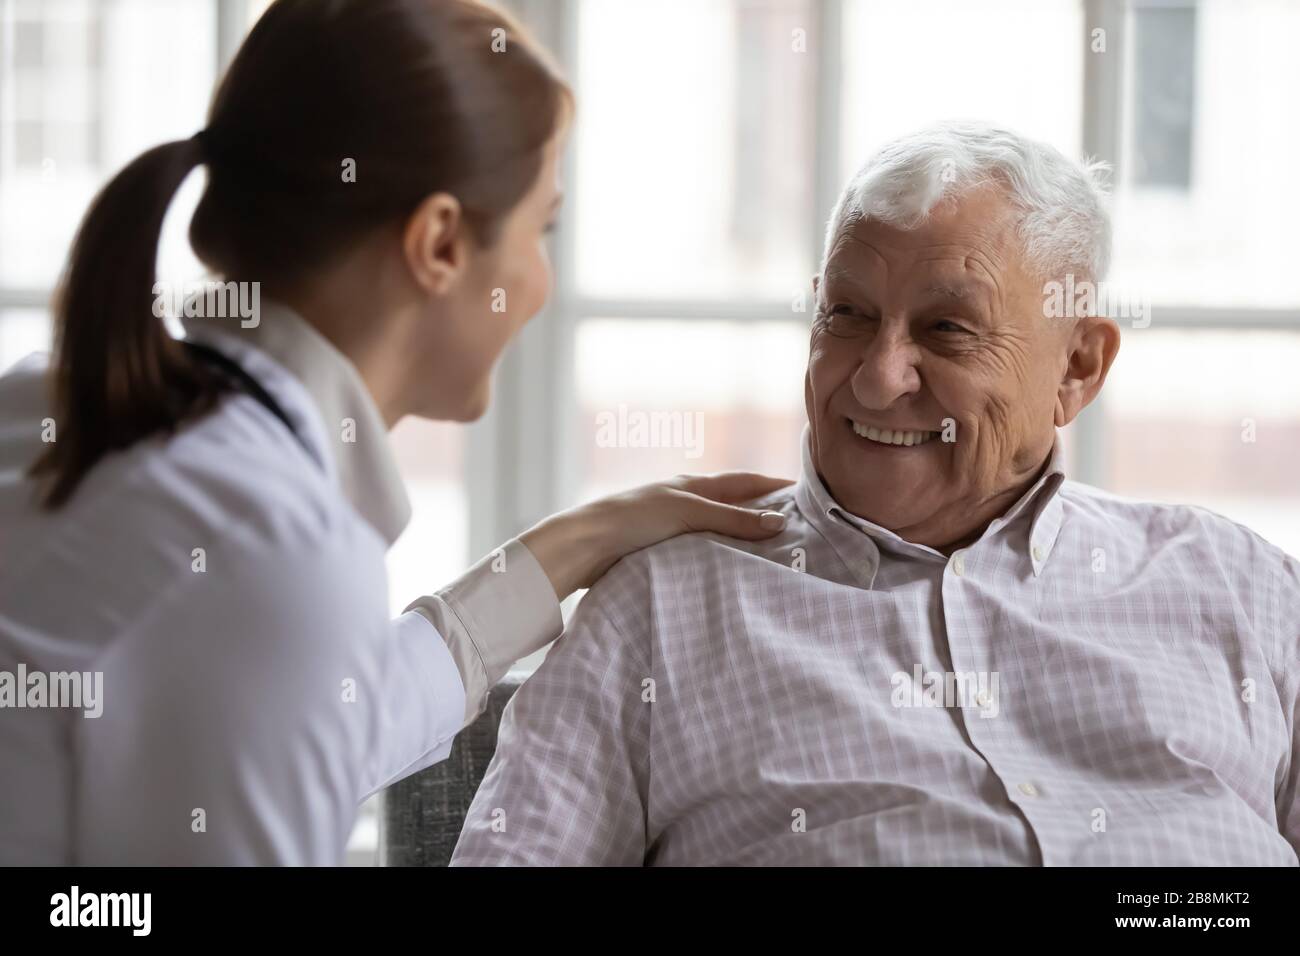 Caring geriatric nurse in white coat cares for elderly man Stock Photo